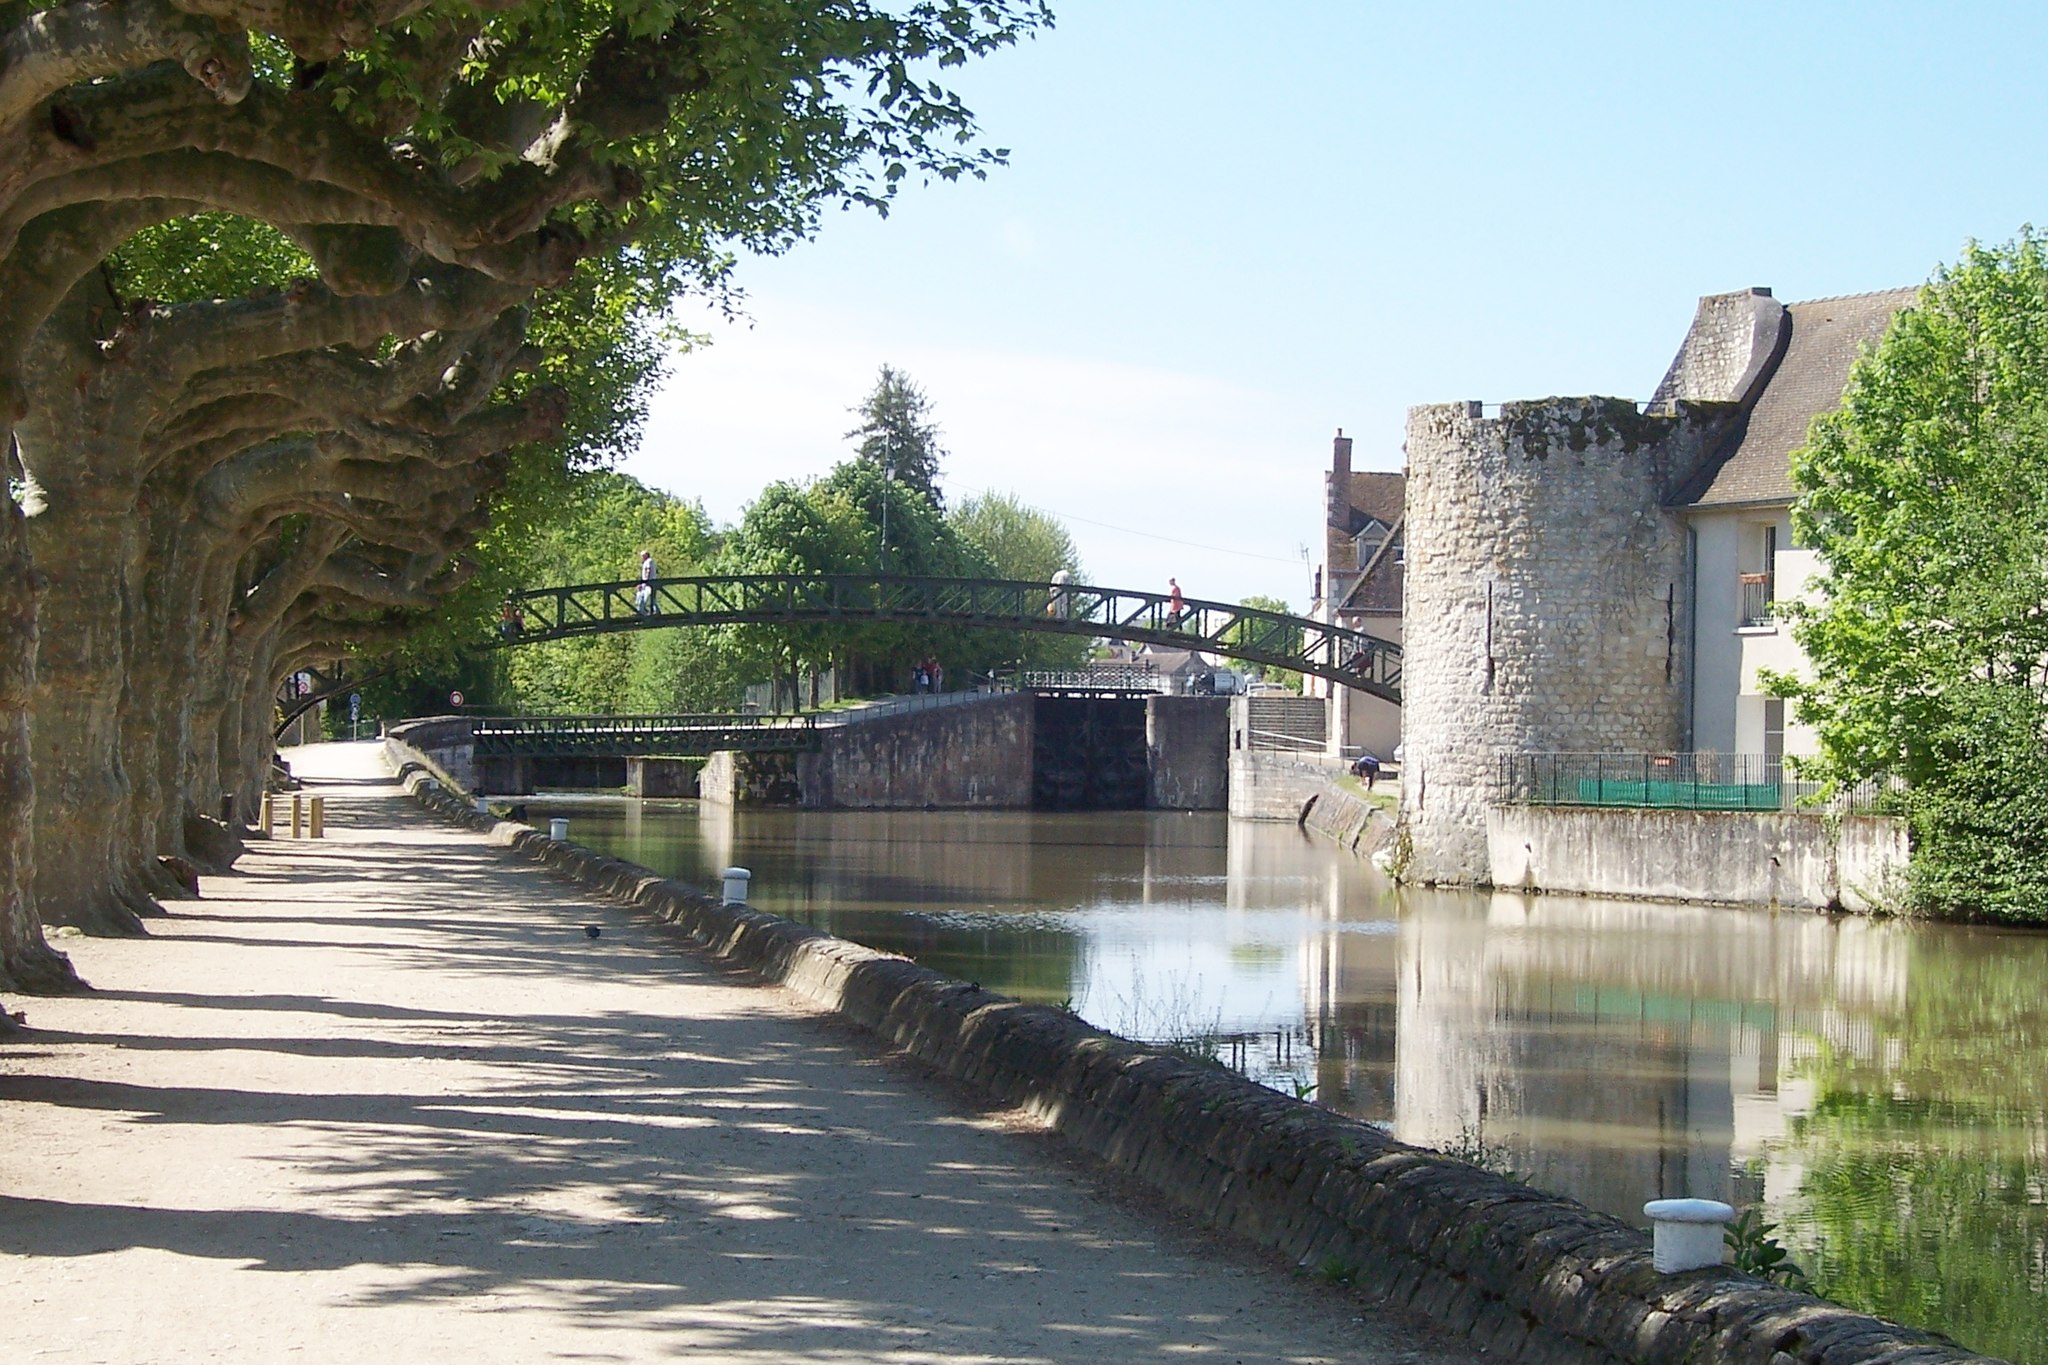 Passerelle Victor Hugo by the Canal de Briare